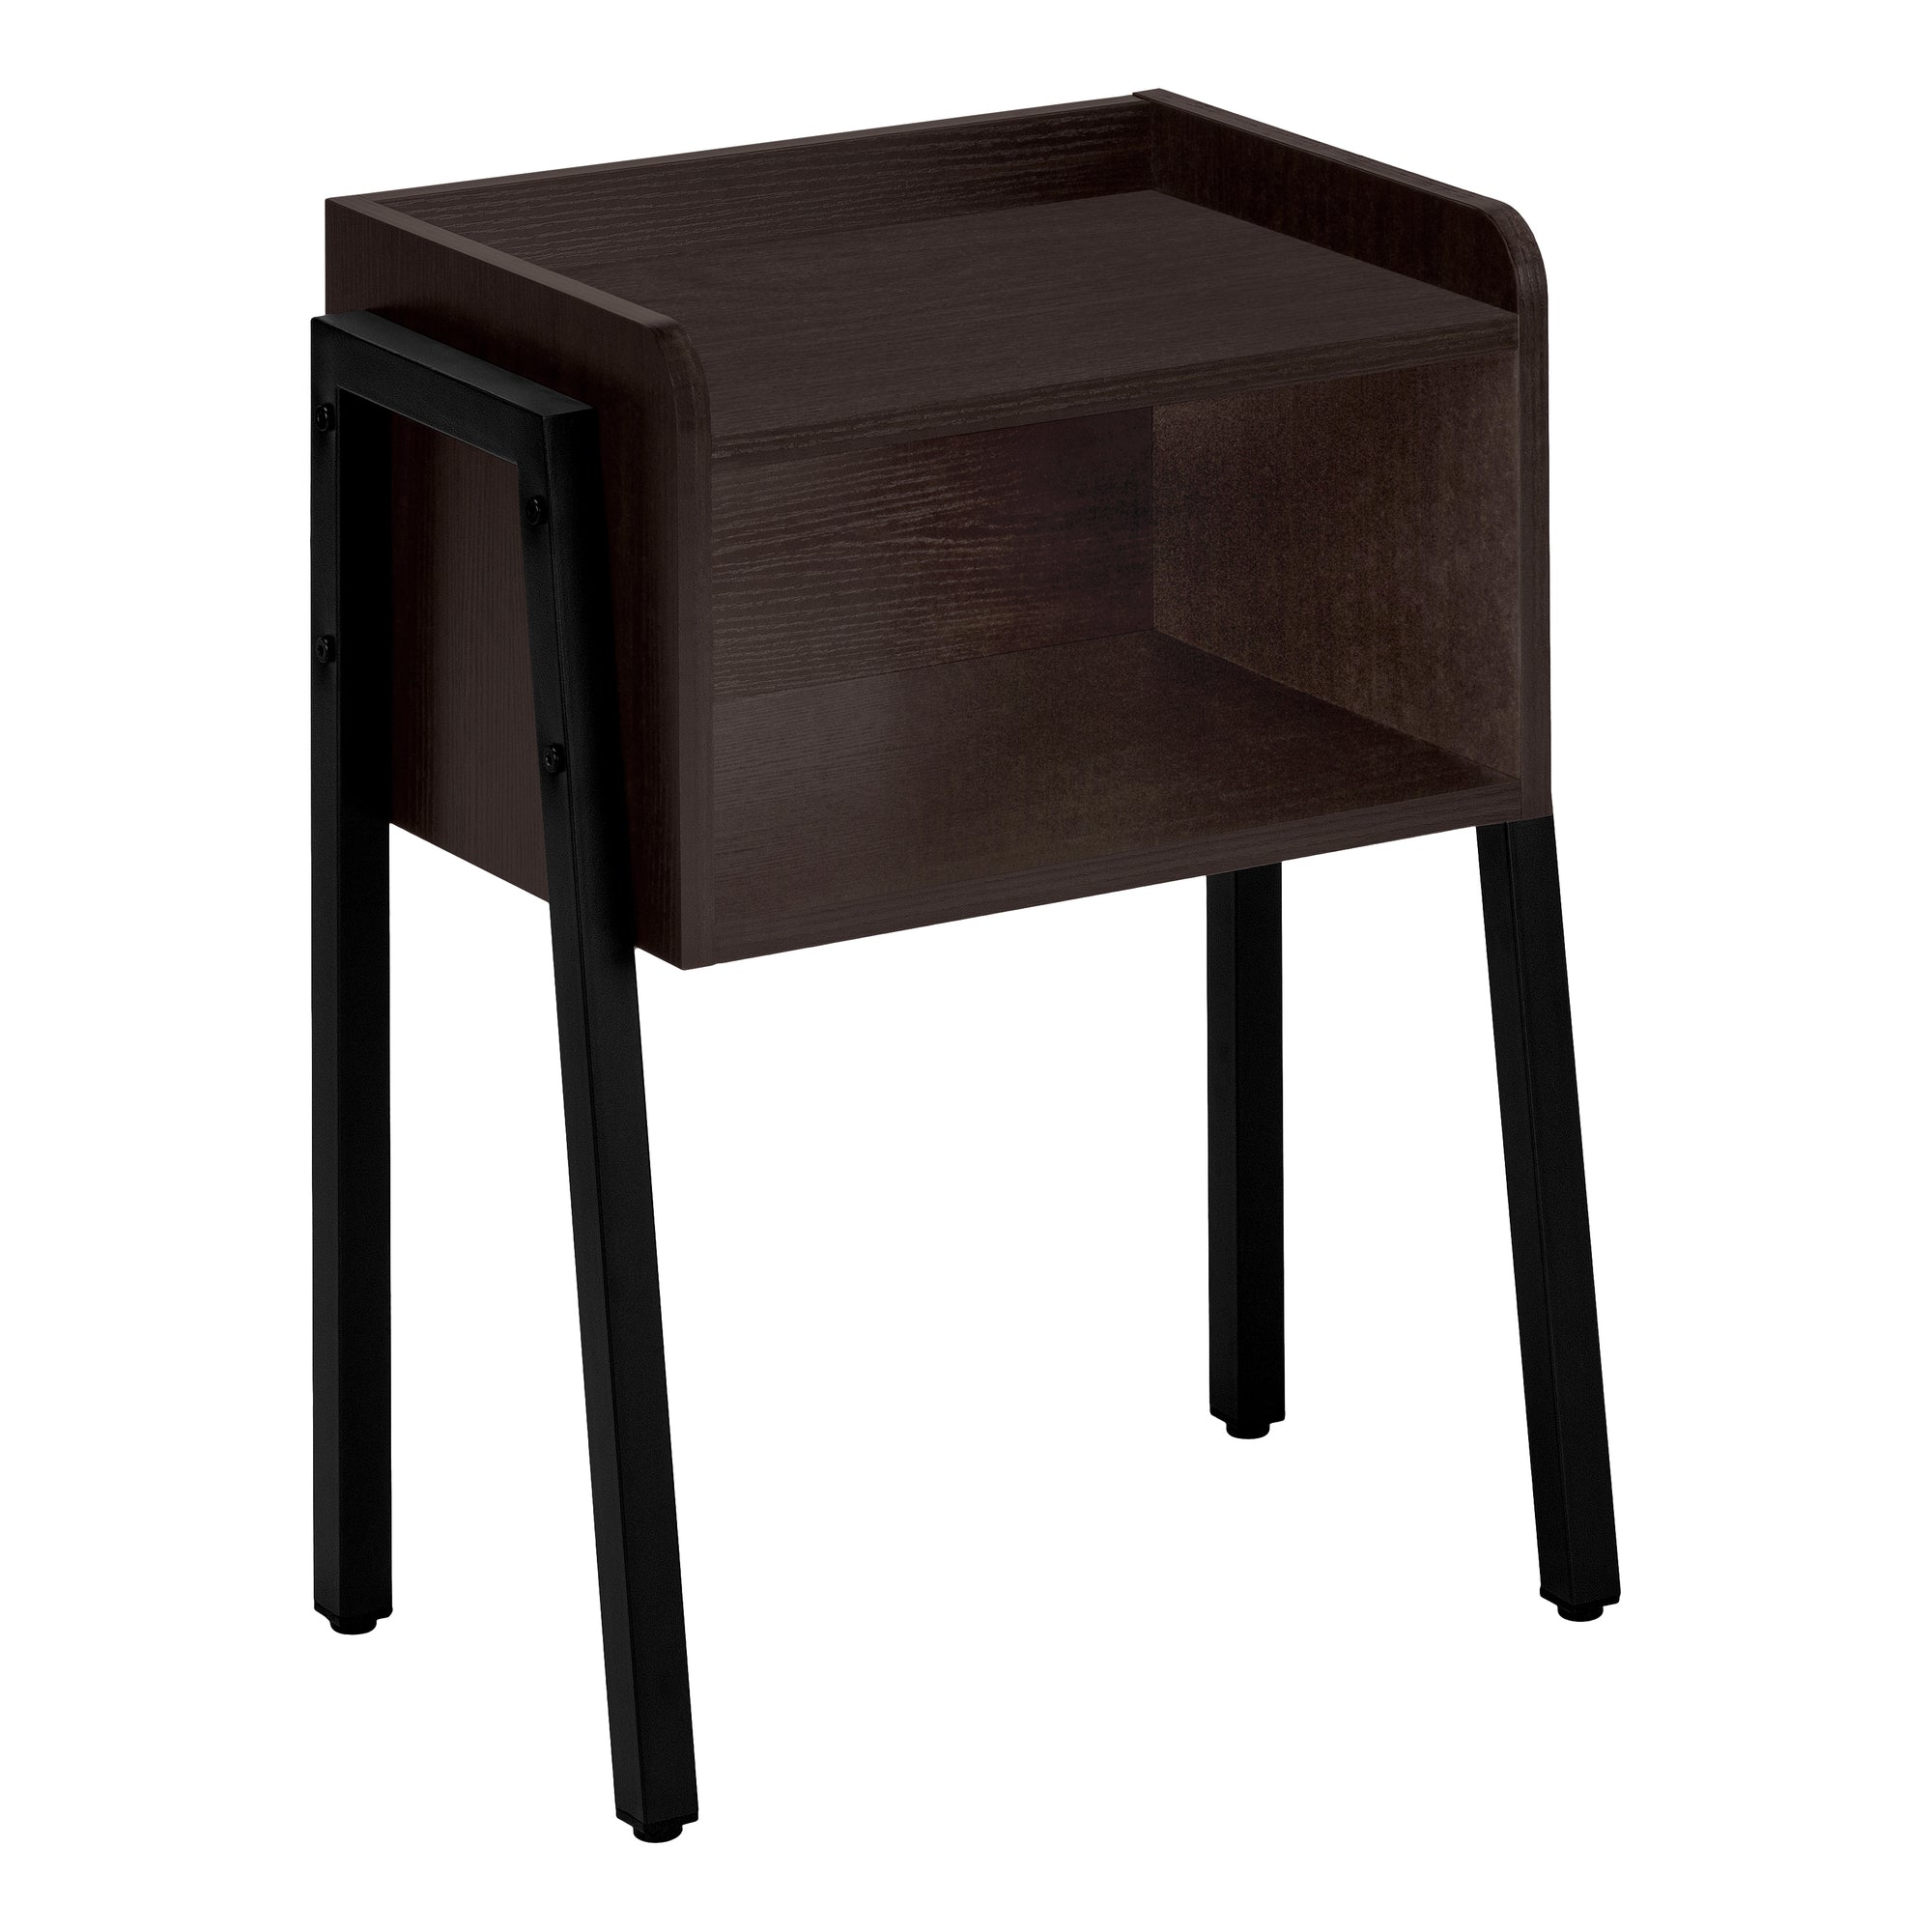 MN-513593    Accent Table, Side, End, Nightstand, Lamp, Living Room, Bedroom, Metal Legs, Laminate, Dark Brown, Black, Contemporary, Modern